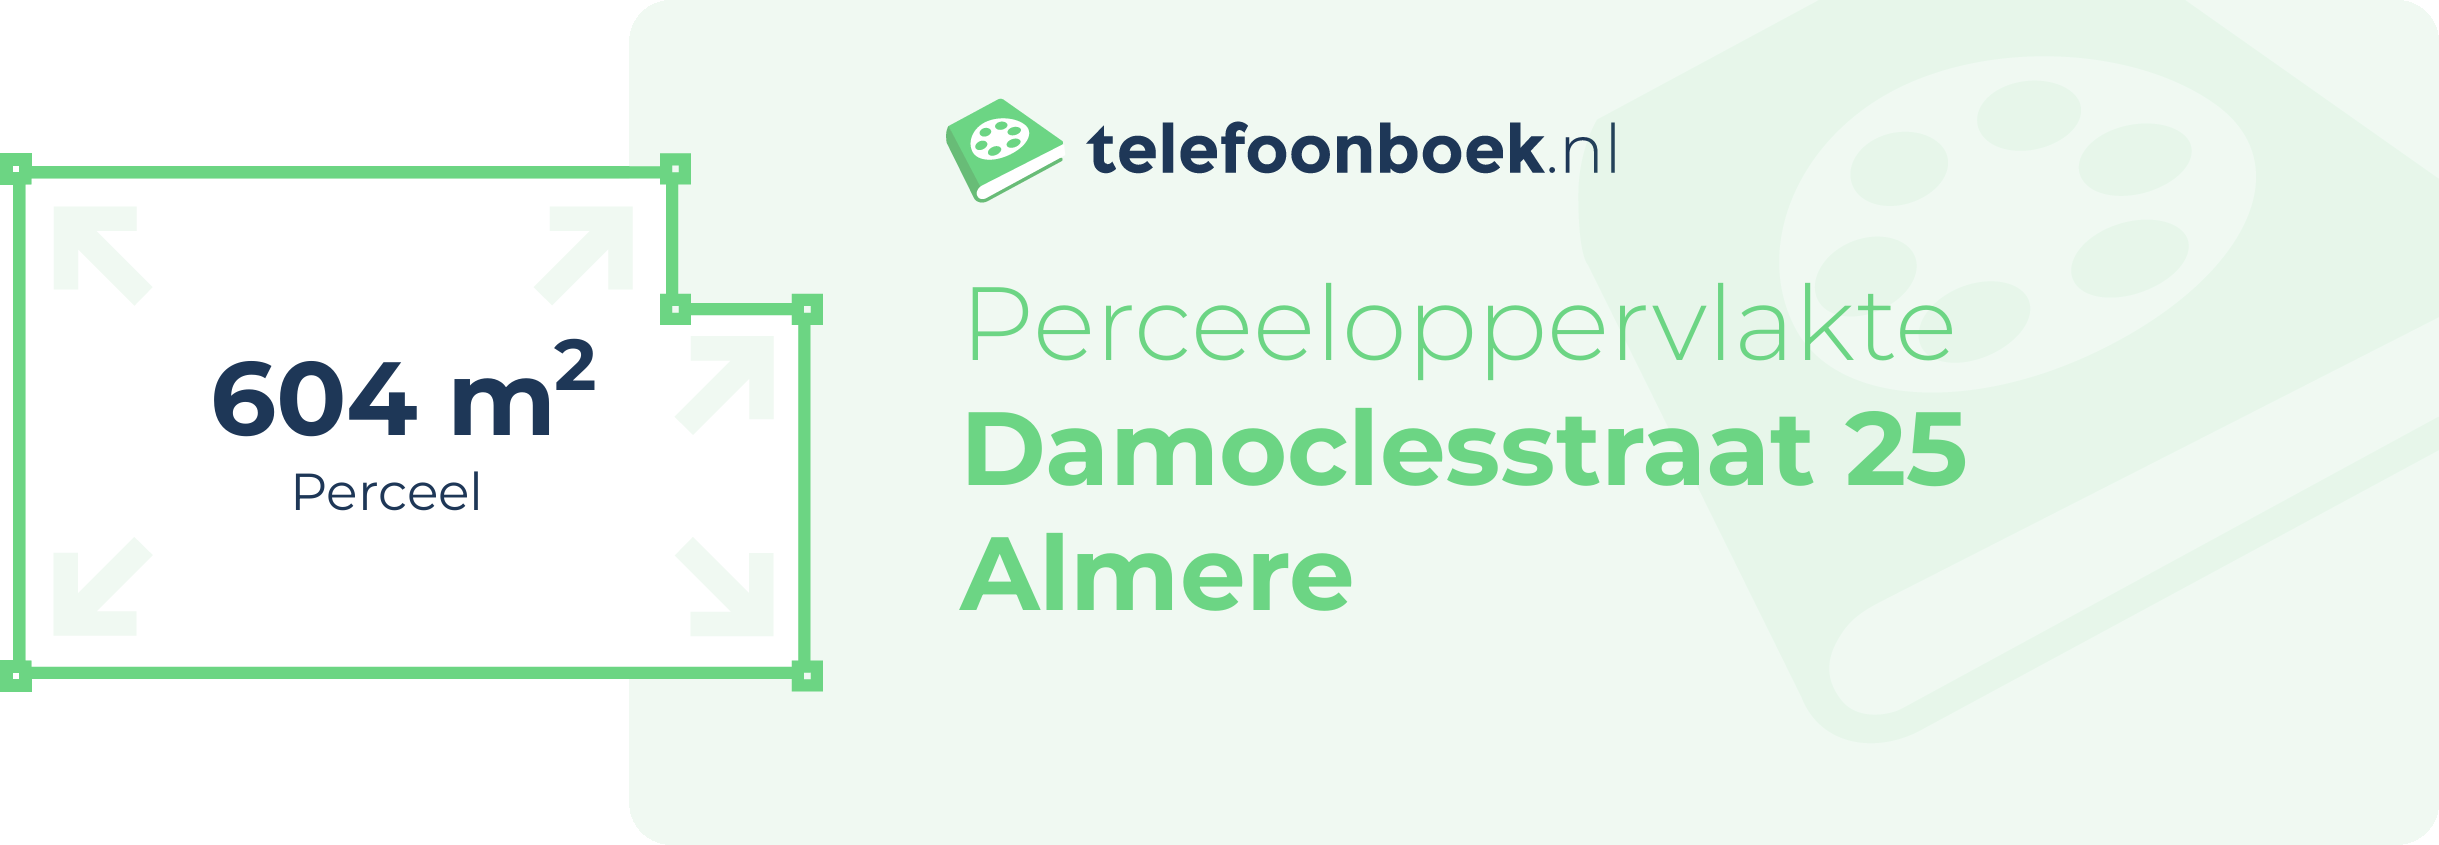 Perceeloppervlakte Damoclesstraat 25 Almere